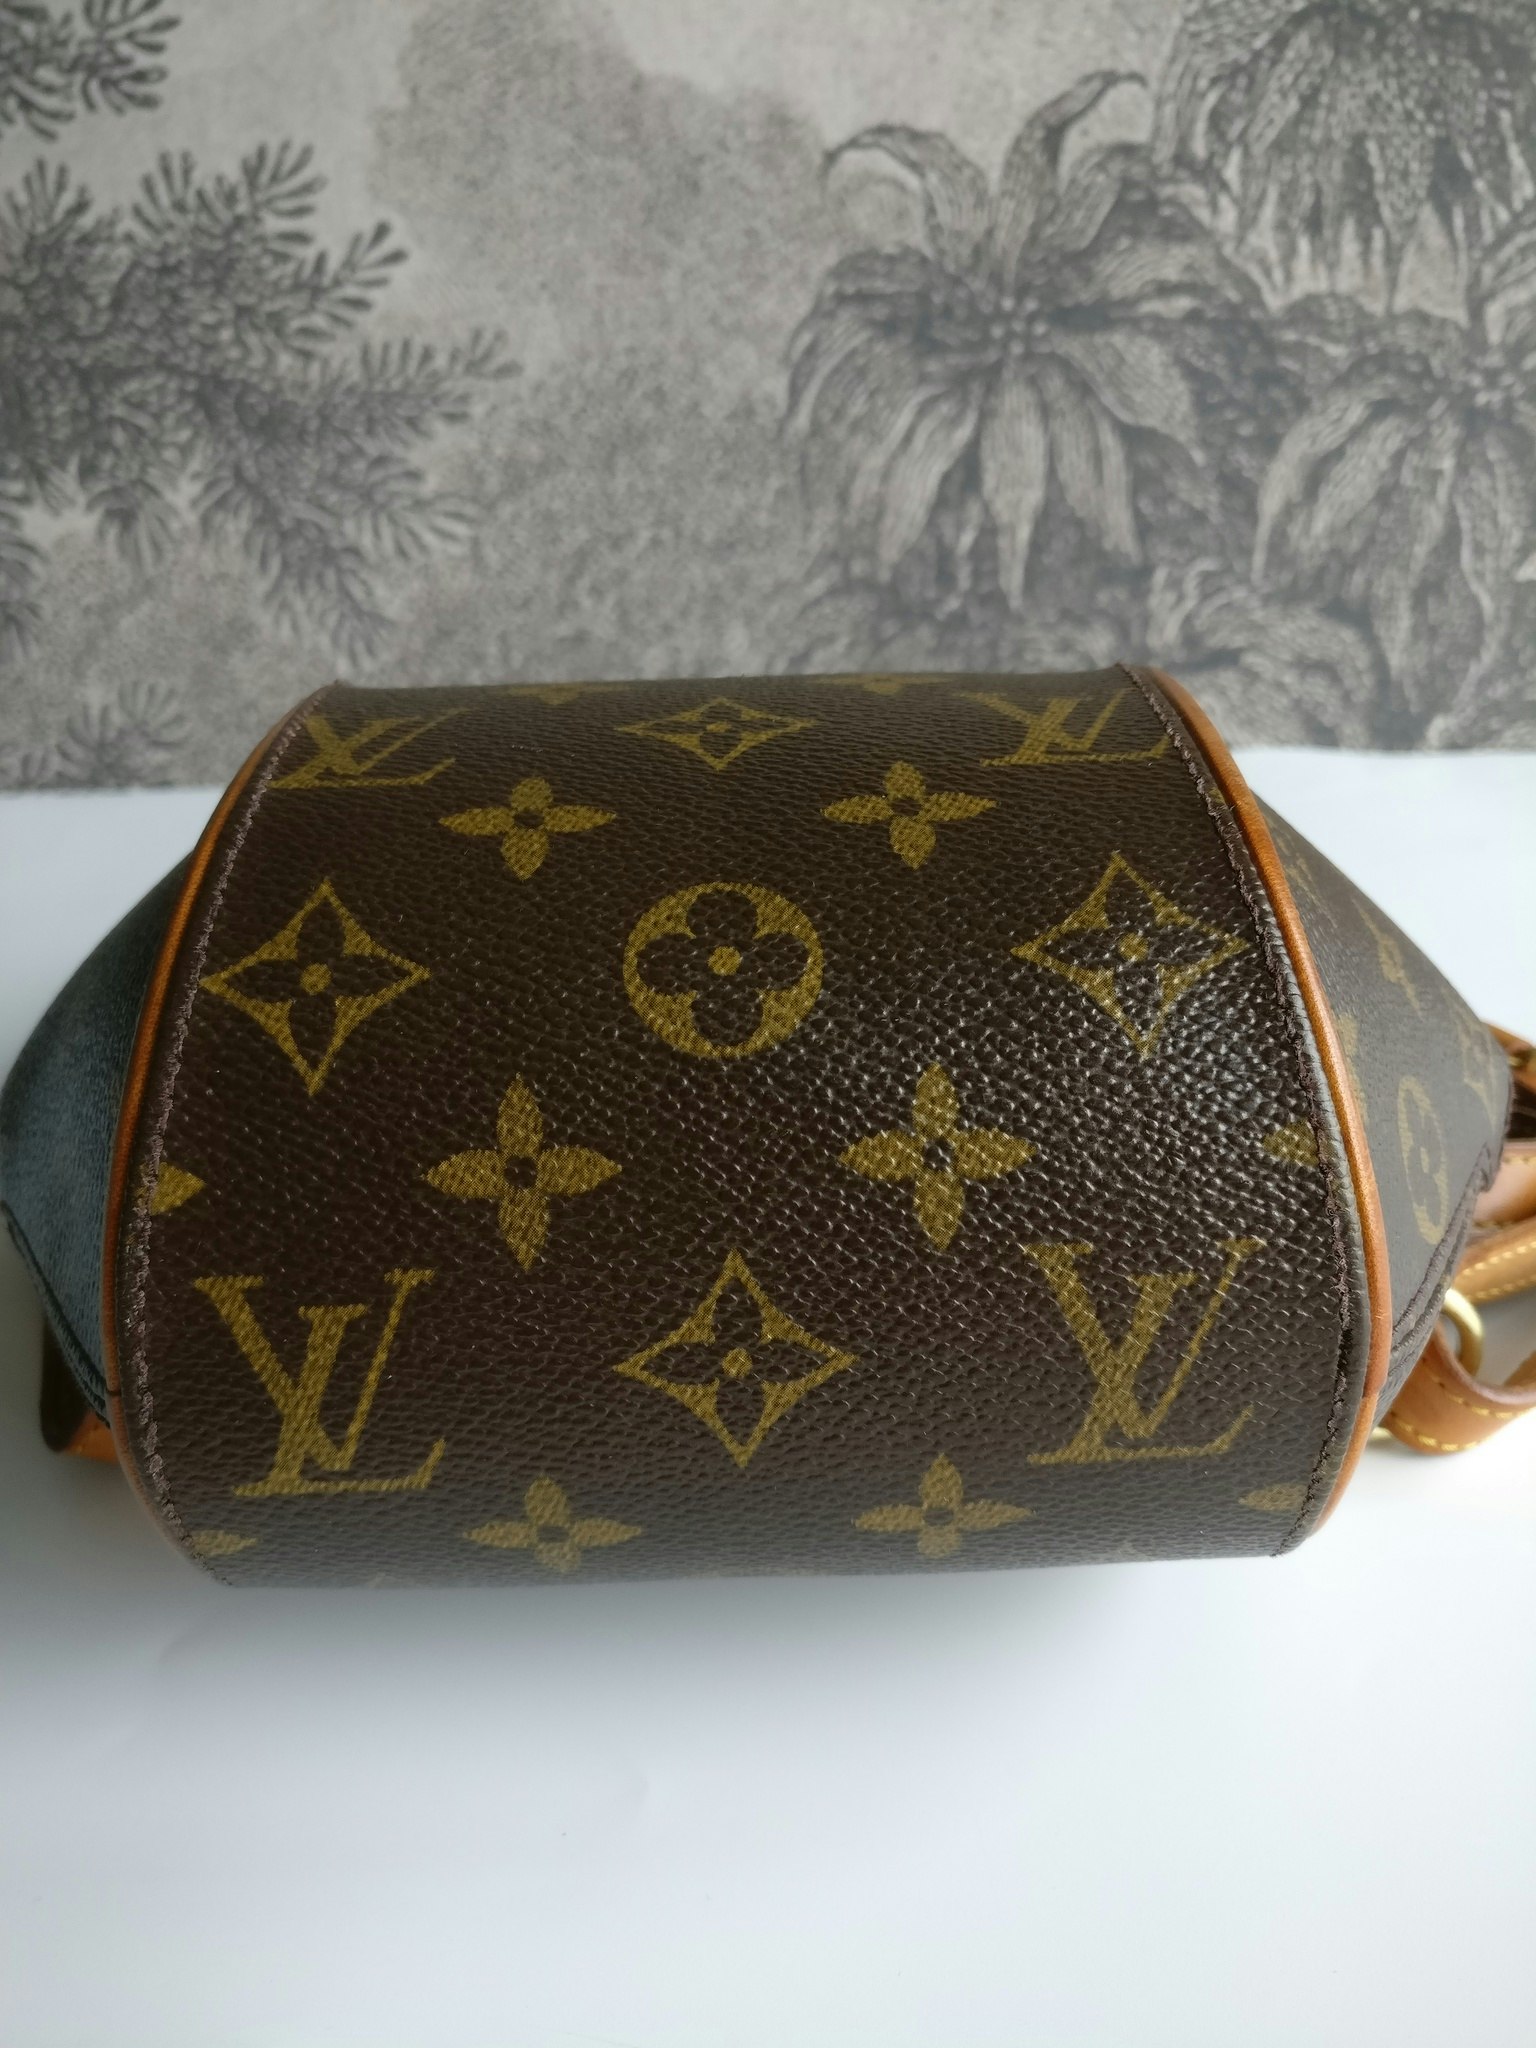 Louis Vuitton Monogram Ellipse Sac a Dos Backpack at Jill's